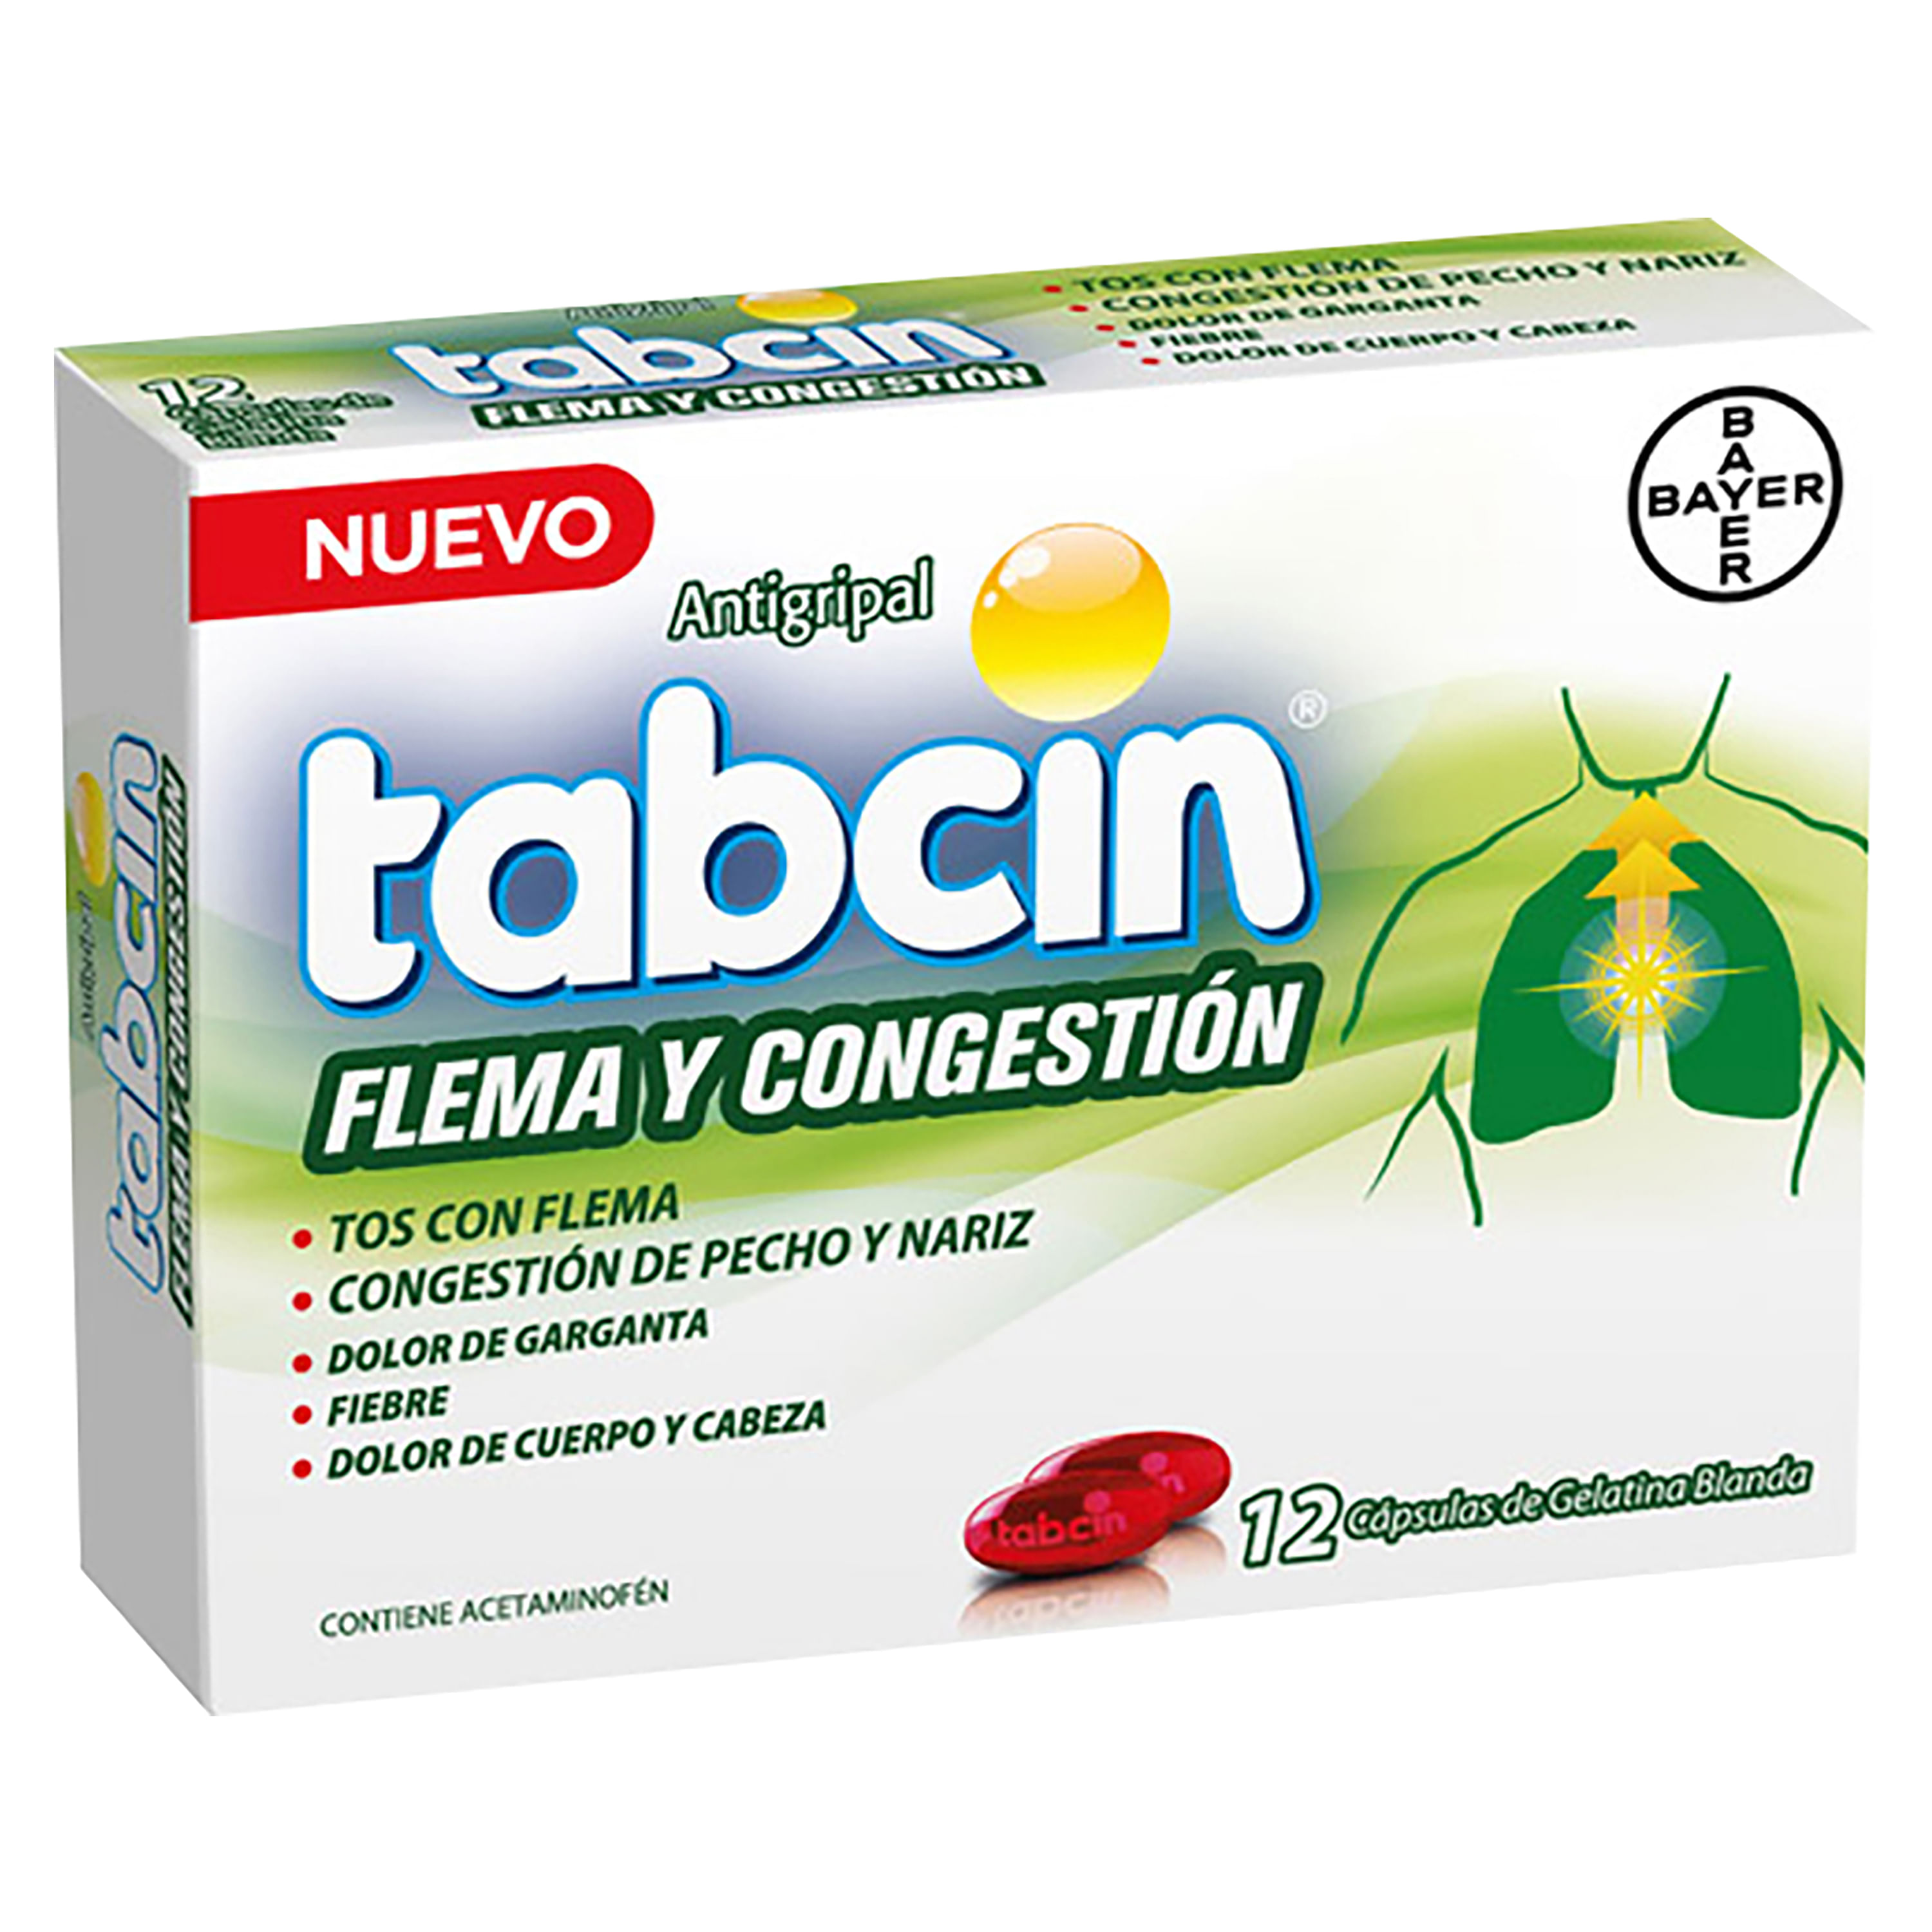 Tabcin-Flema-Y-Congestion-Liquid-Gel-Caja-X-12-C-psulas-1-938